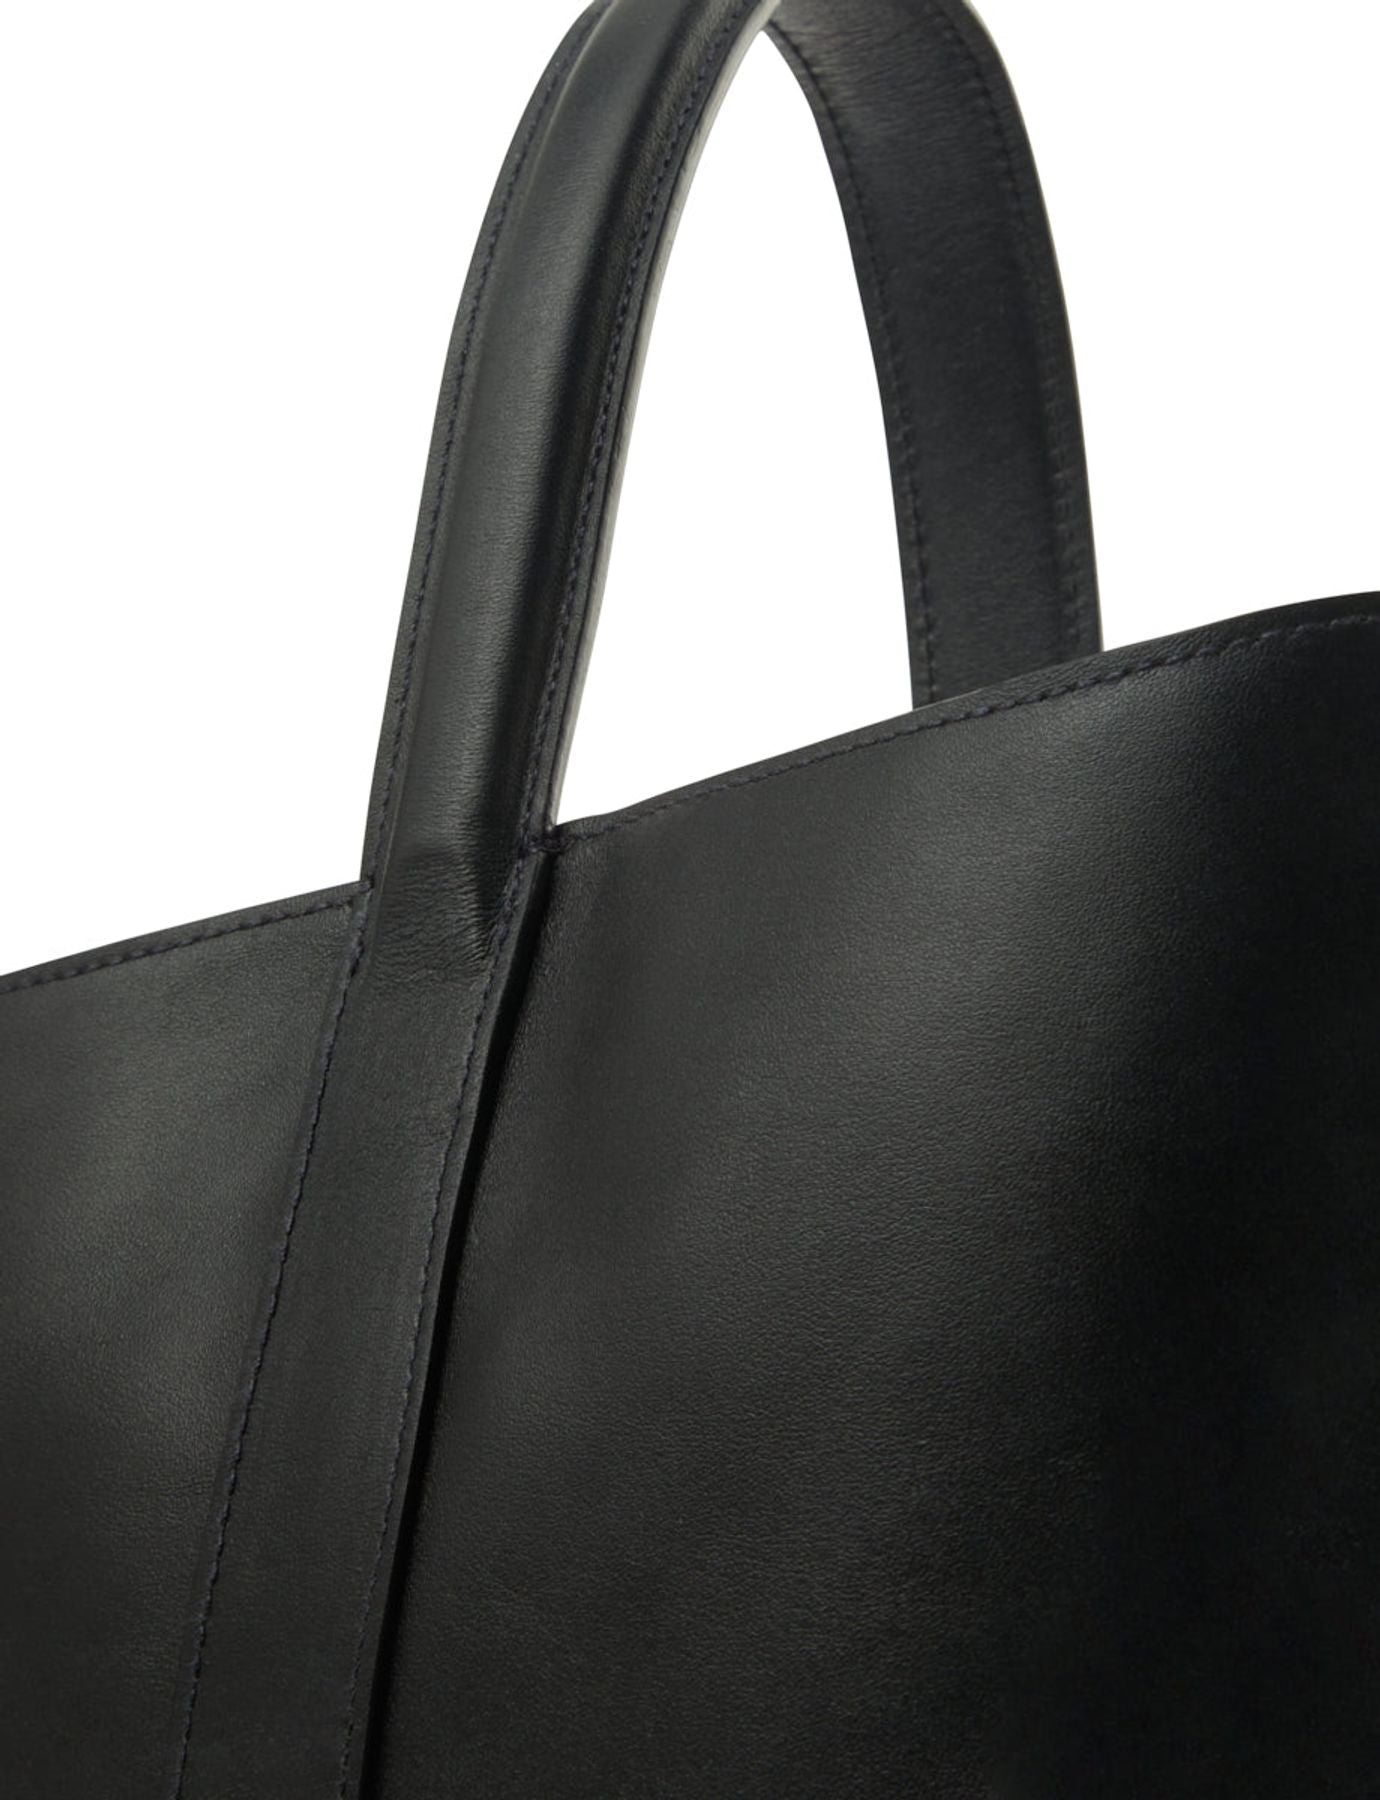 bag-leonore-size-s-leather-black